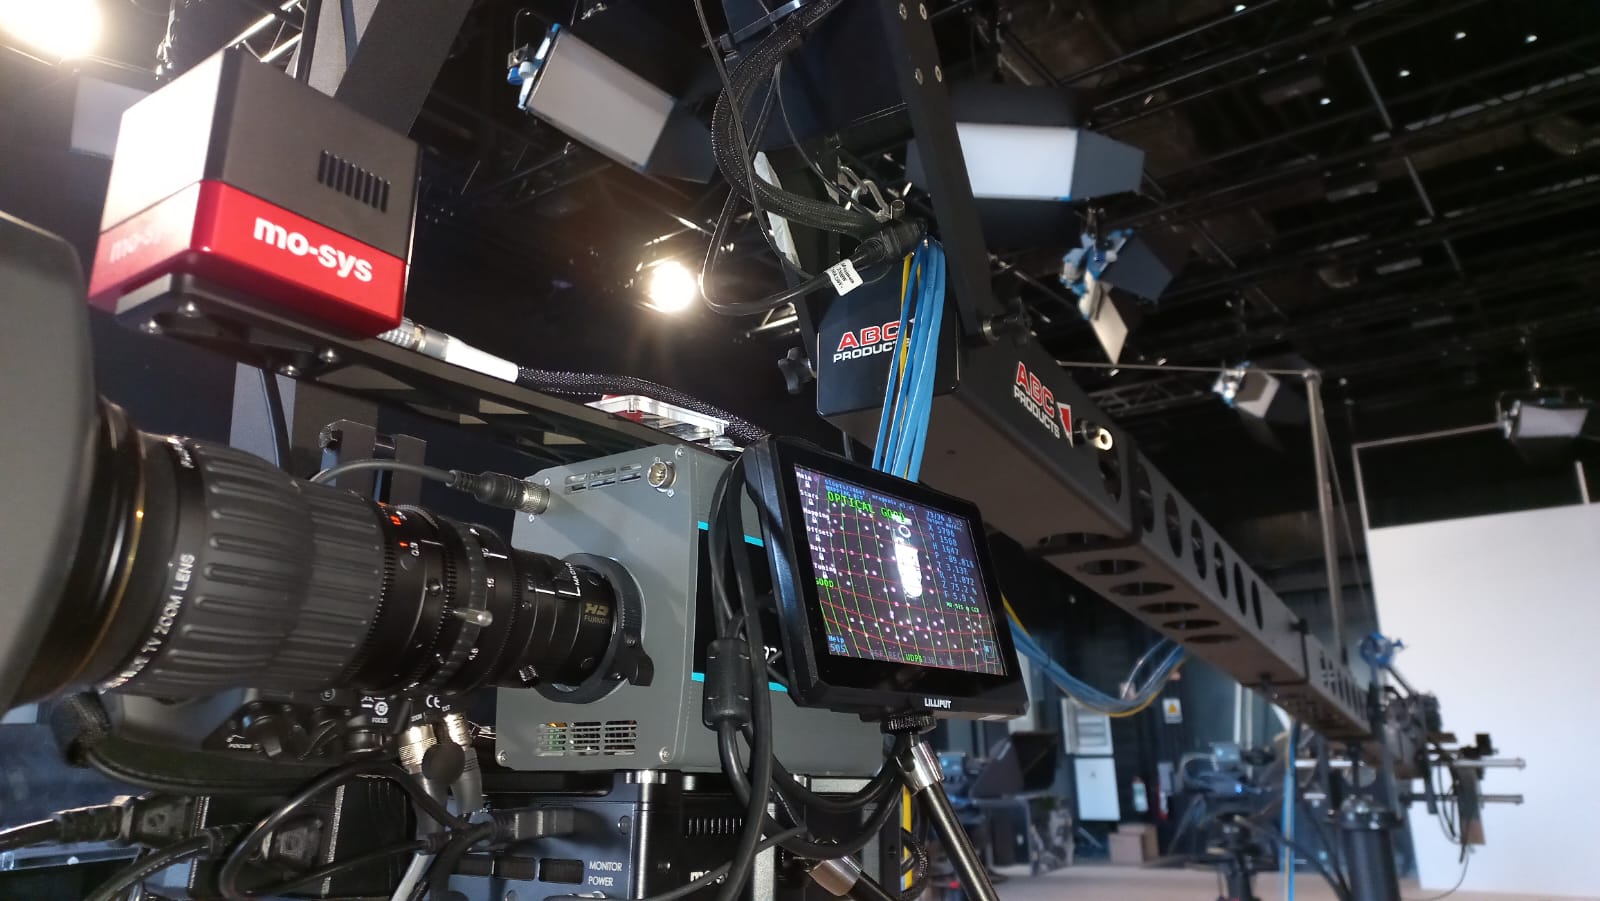 Startracker de Mo-sys en cámara para estudio de Aragon TV